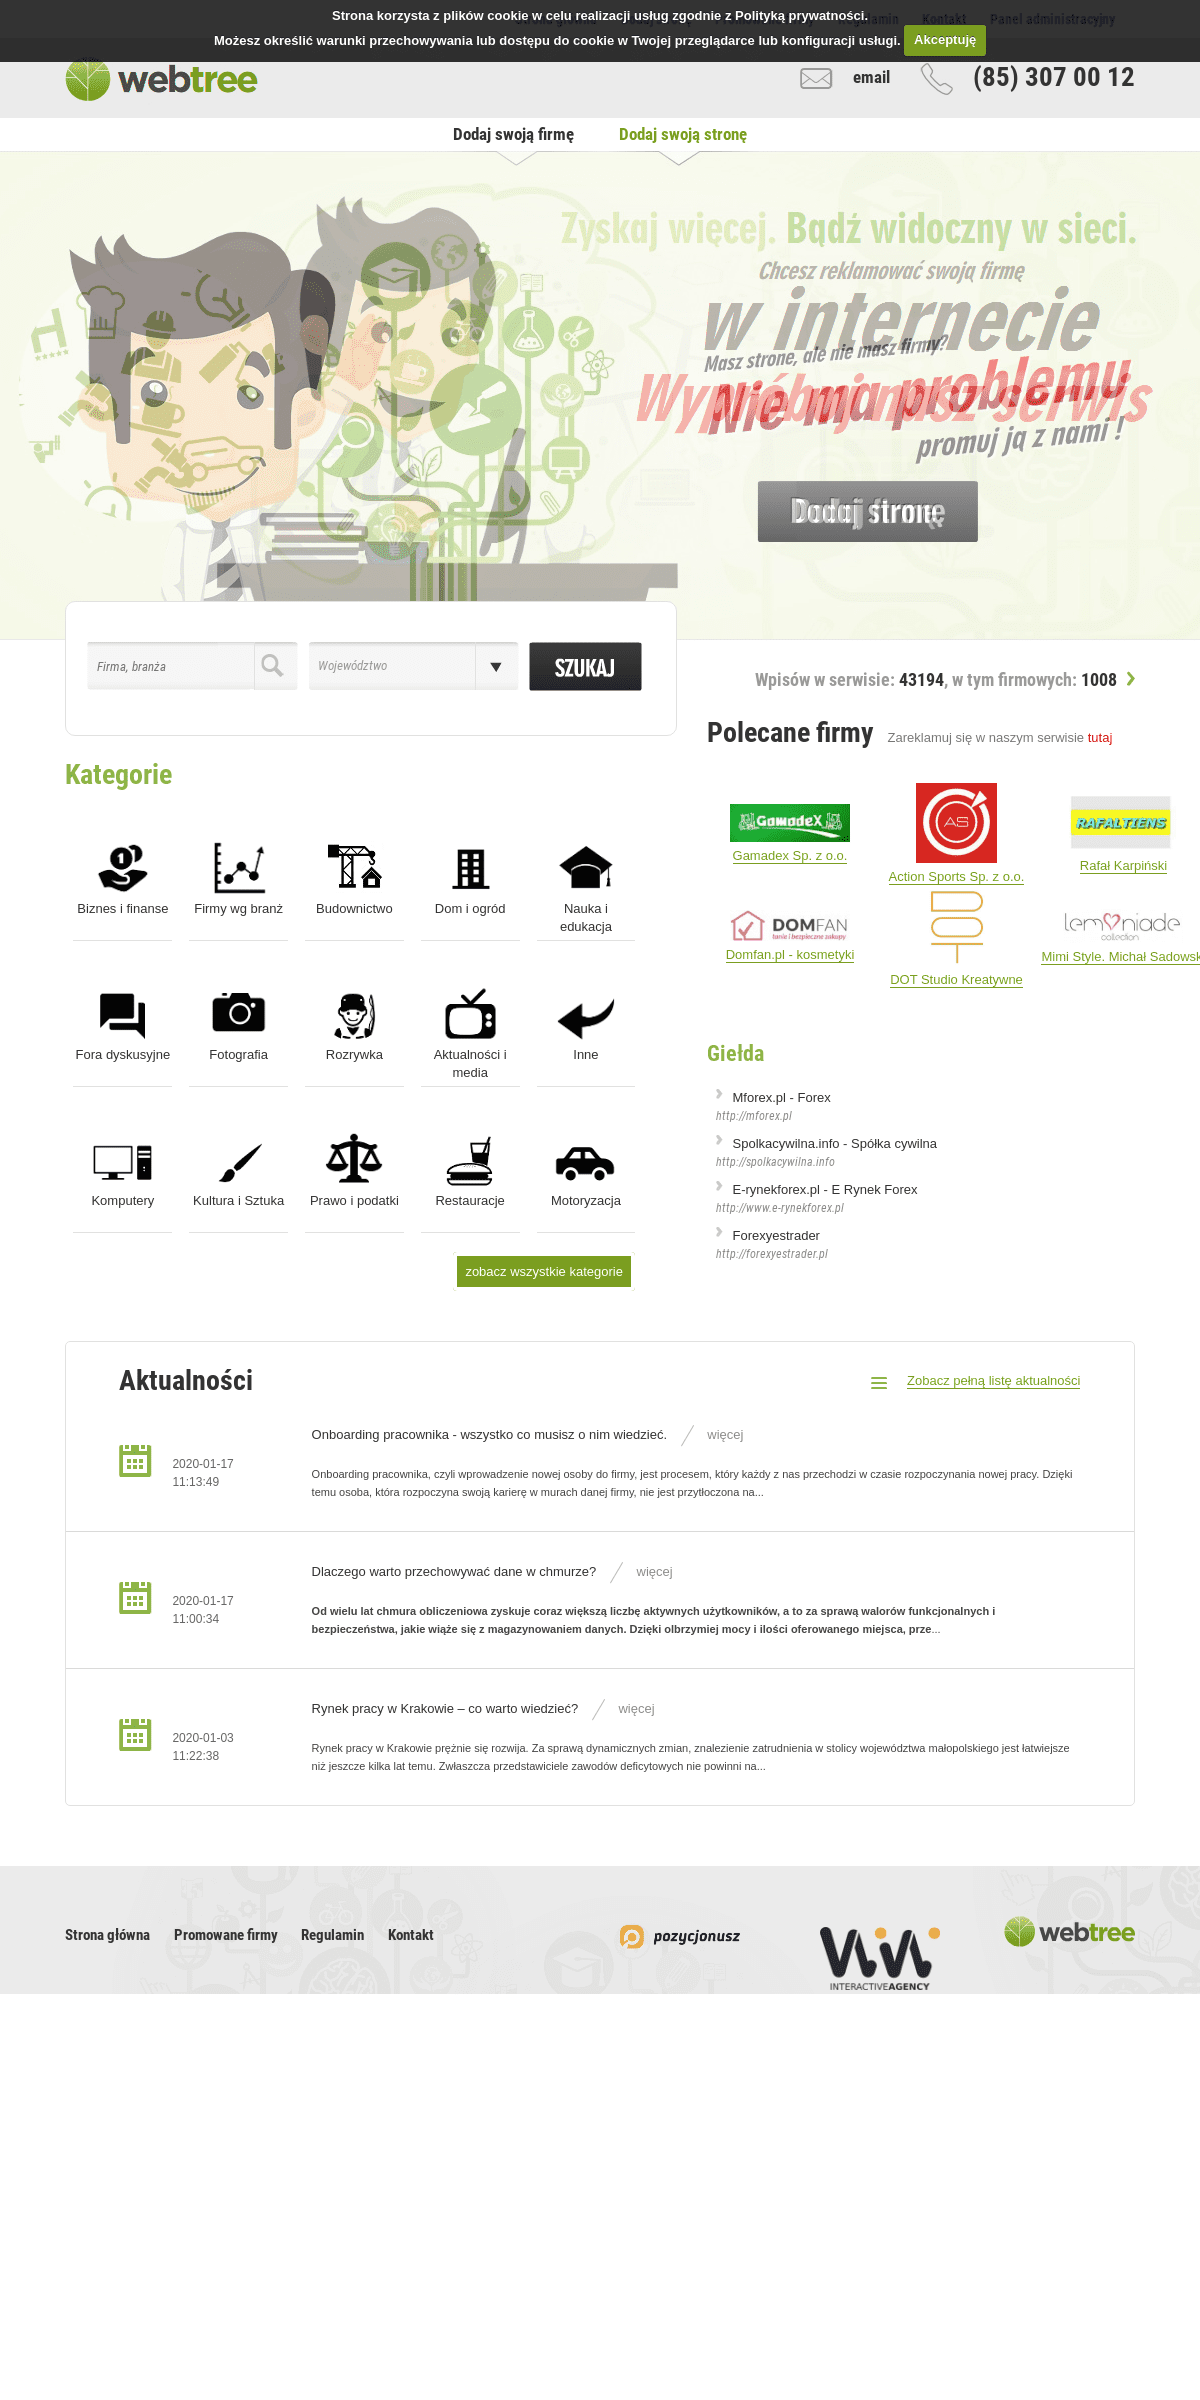 A complete backup of webtree.com.pl